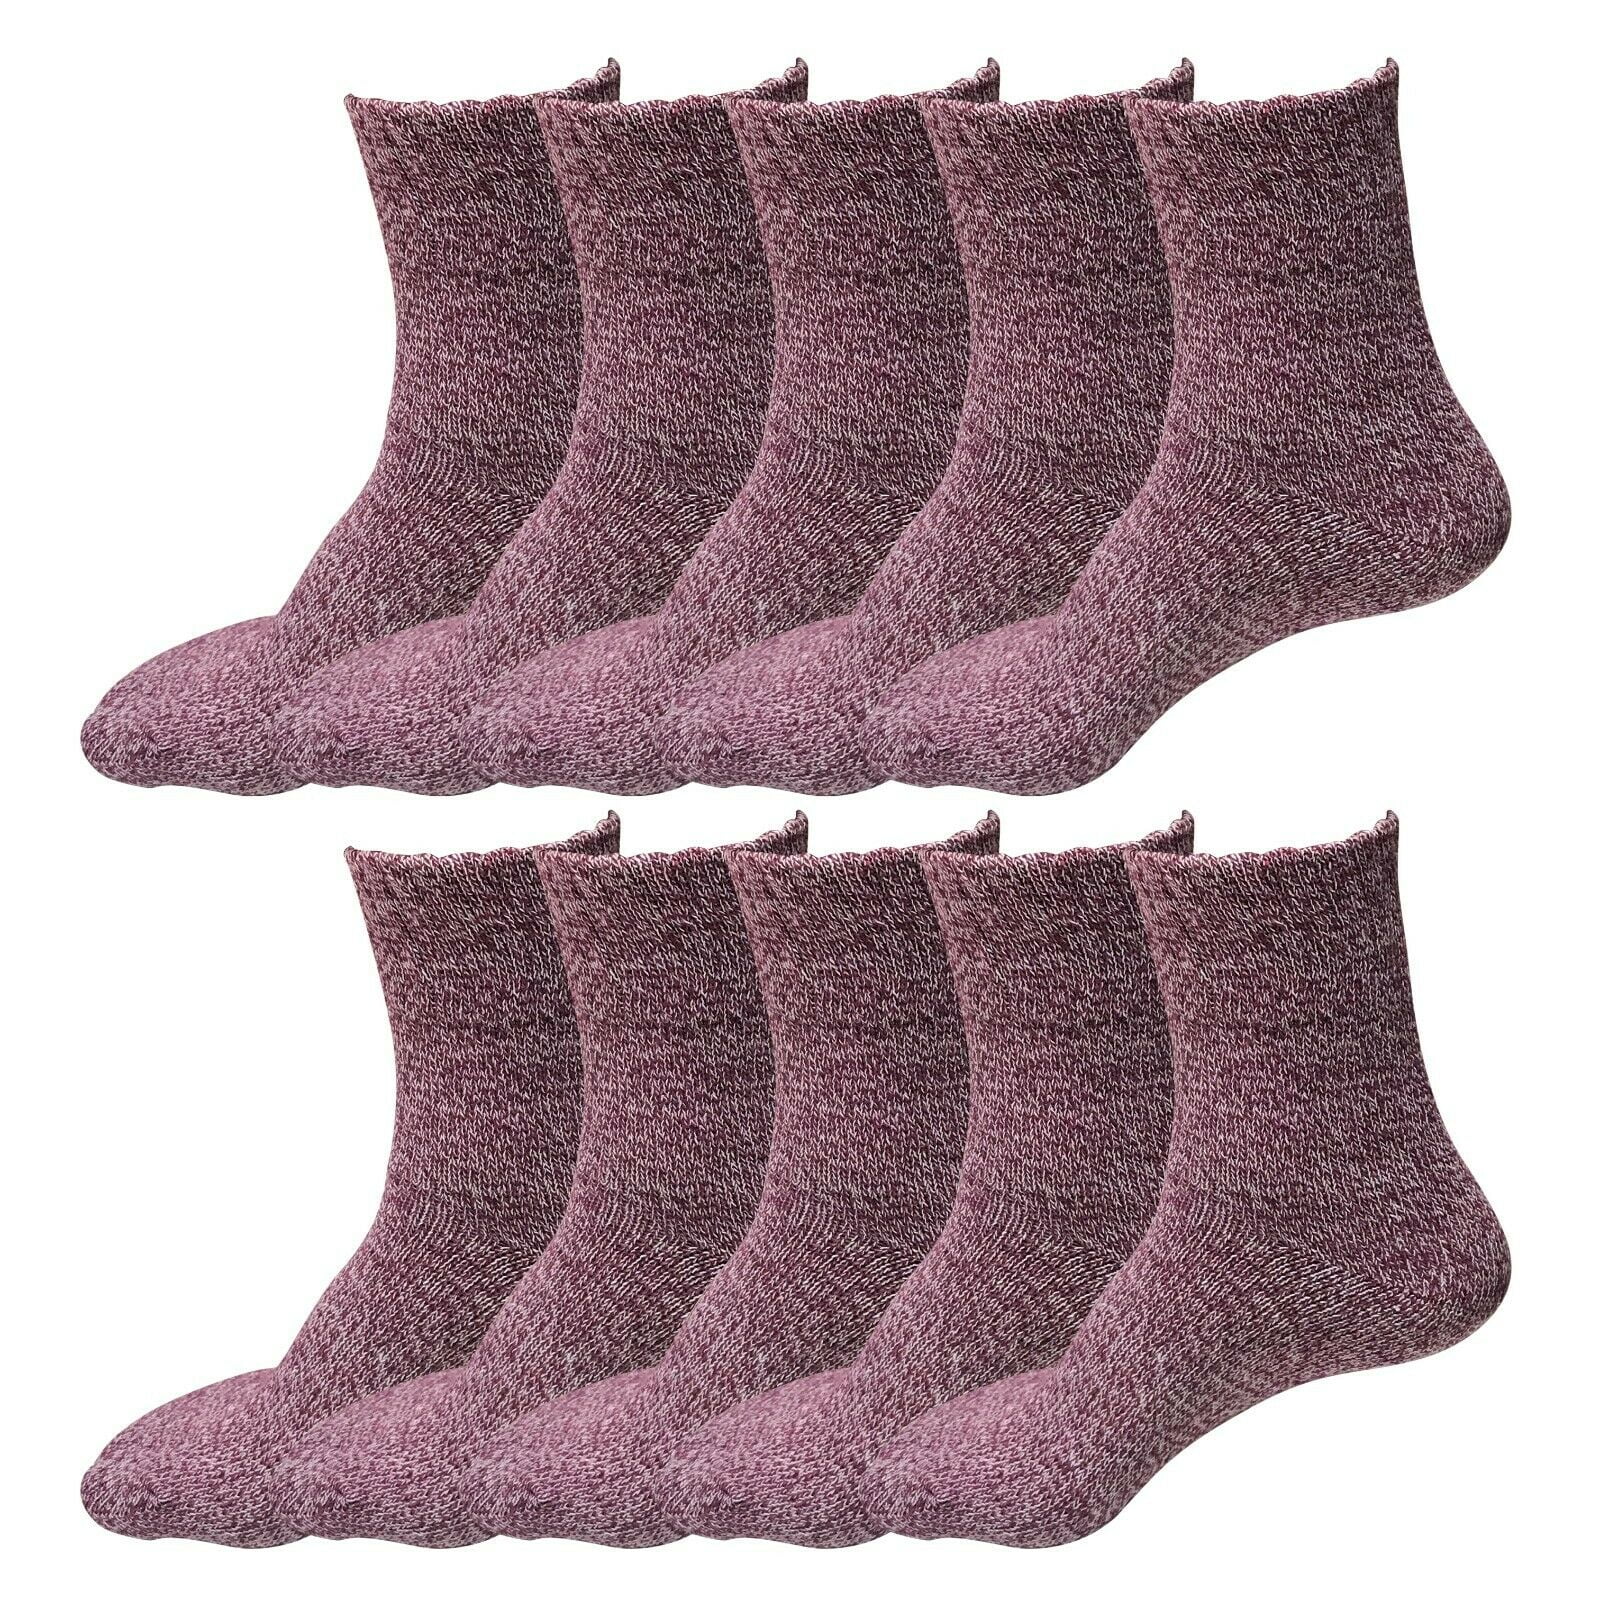 3 Pairs/Lot of Warm Thermal Thick Heavy duty Alpaca Dog Wool Long SocksHiking 